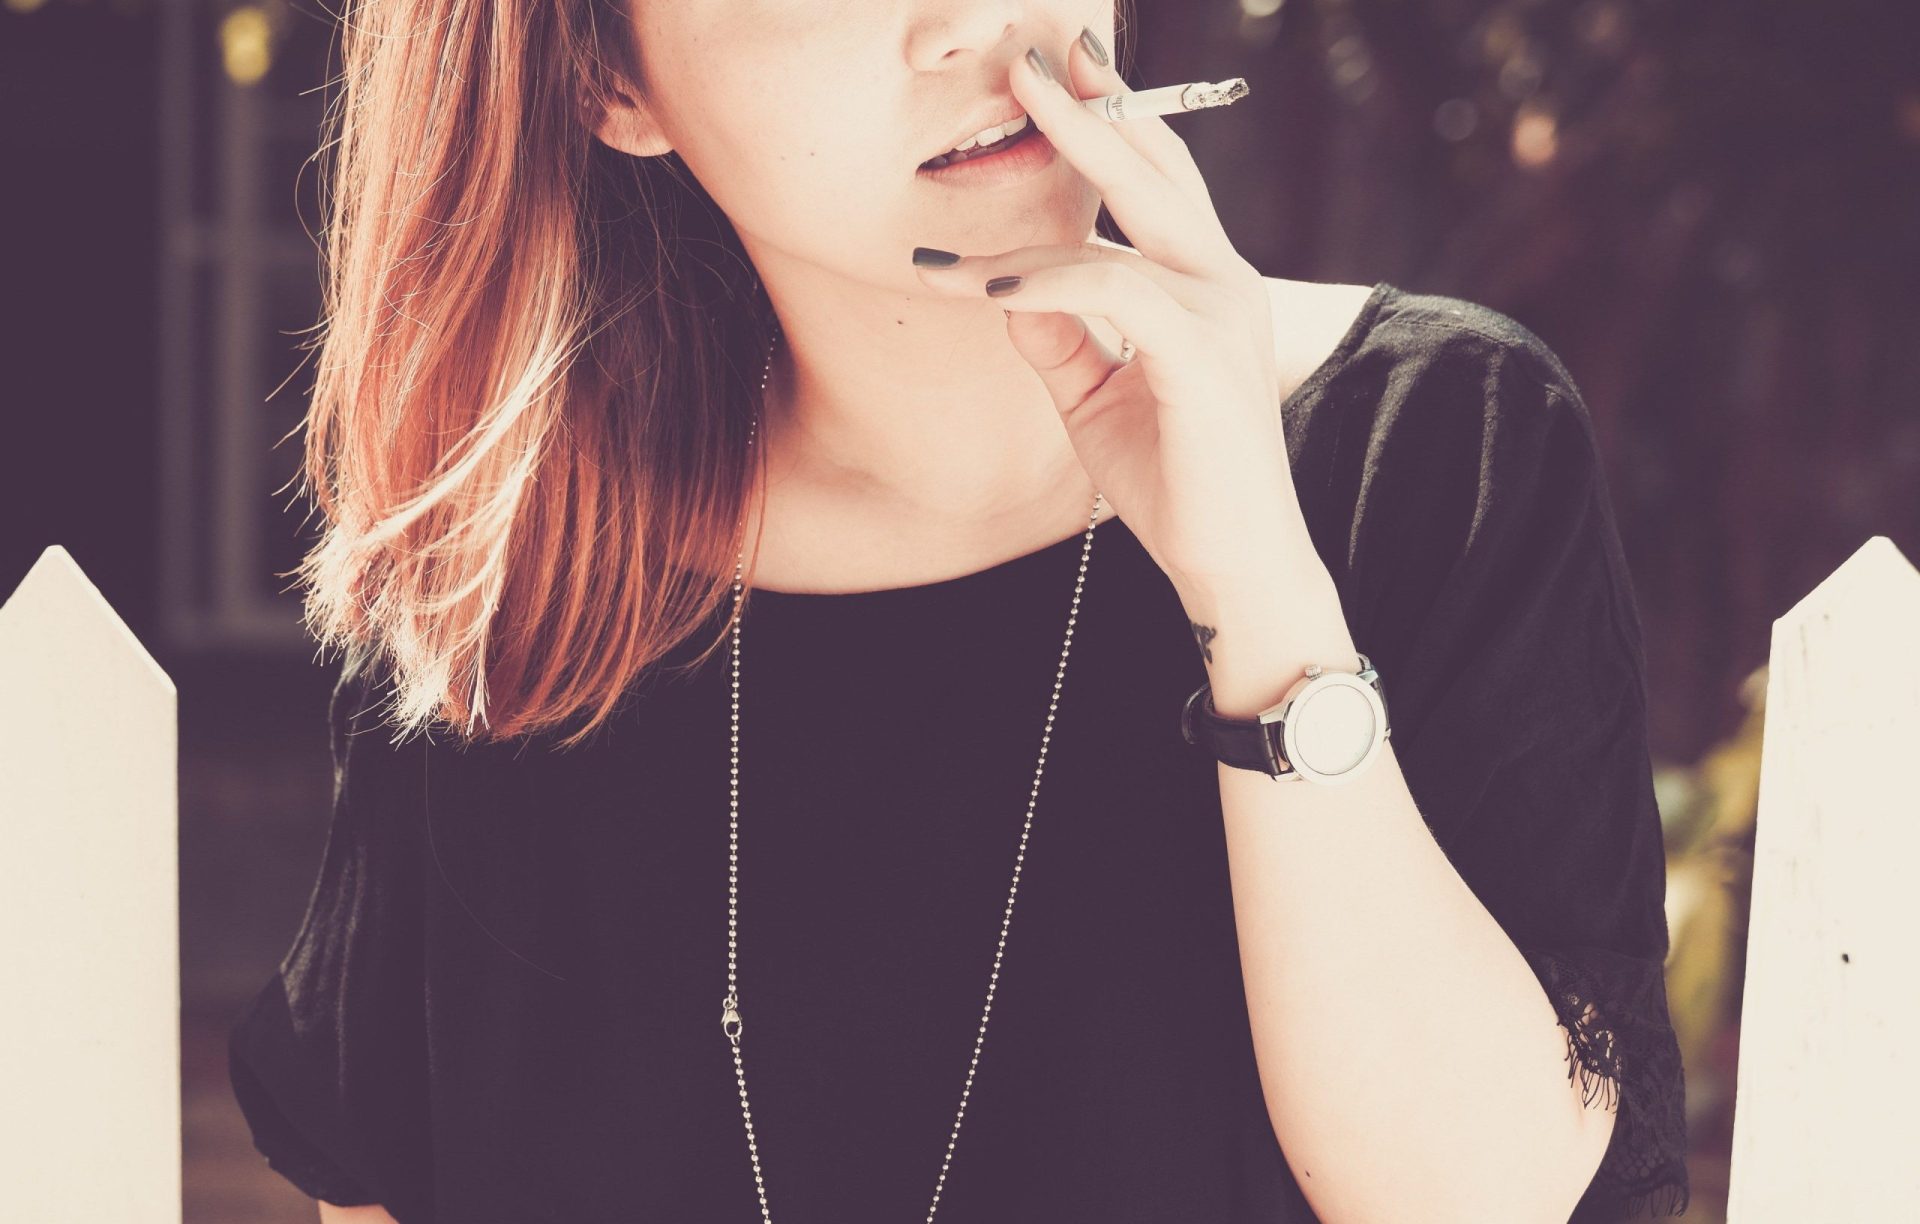 Wallpaper / young woman smoking a cigarette outside